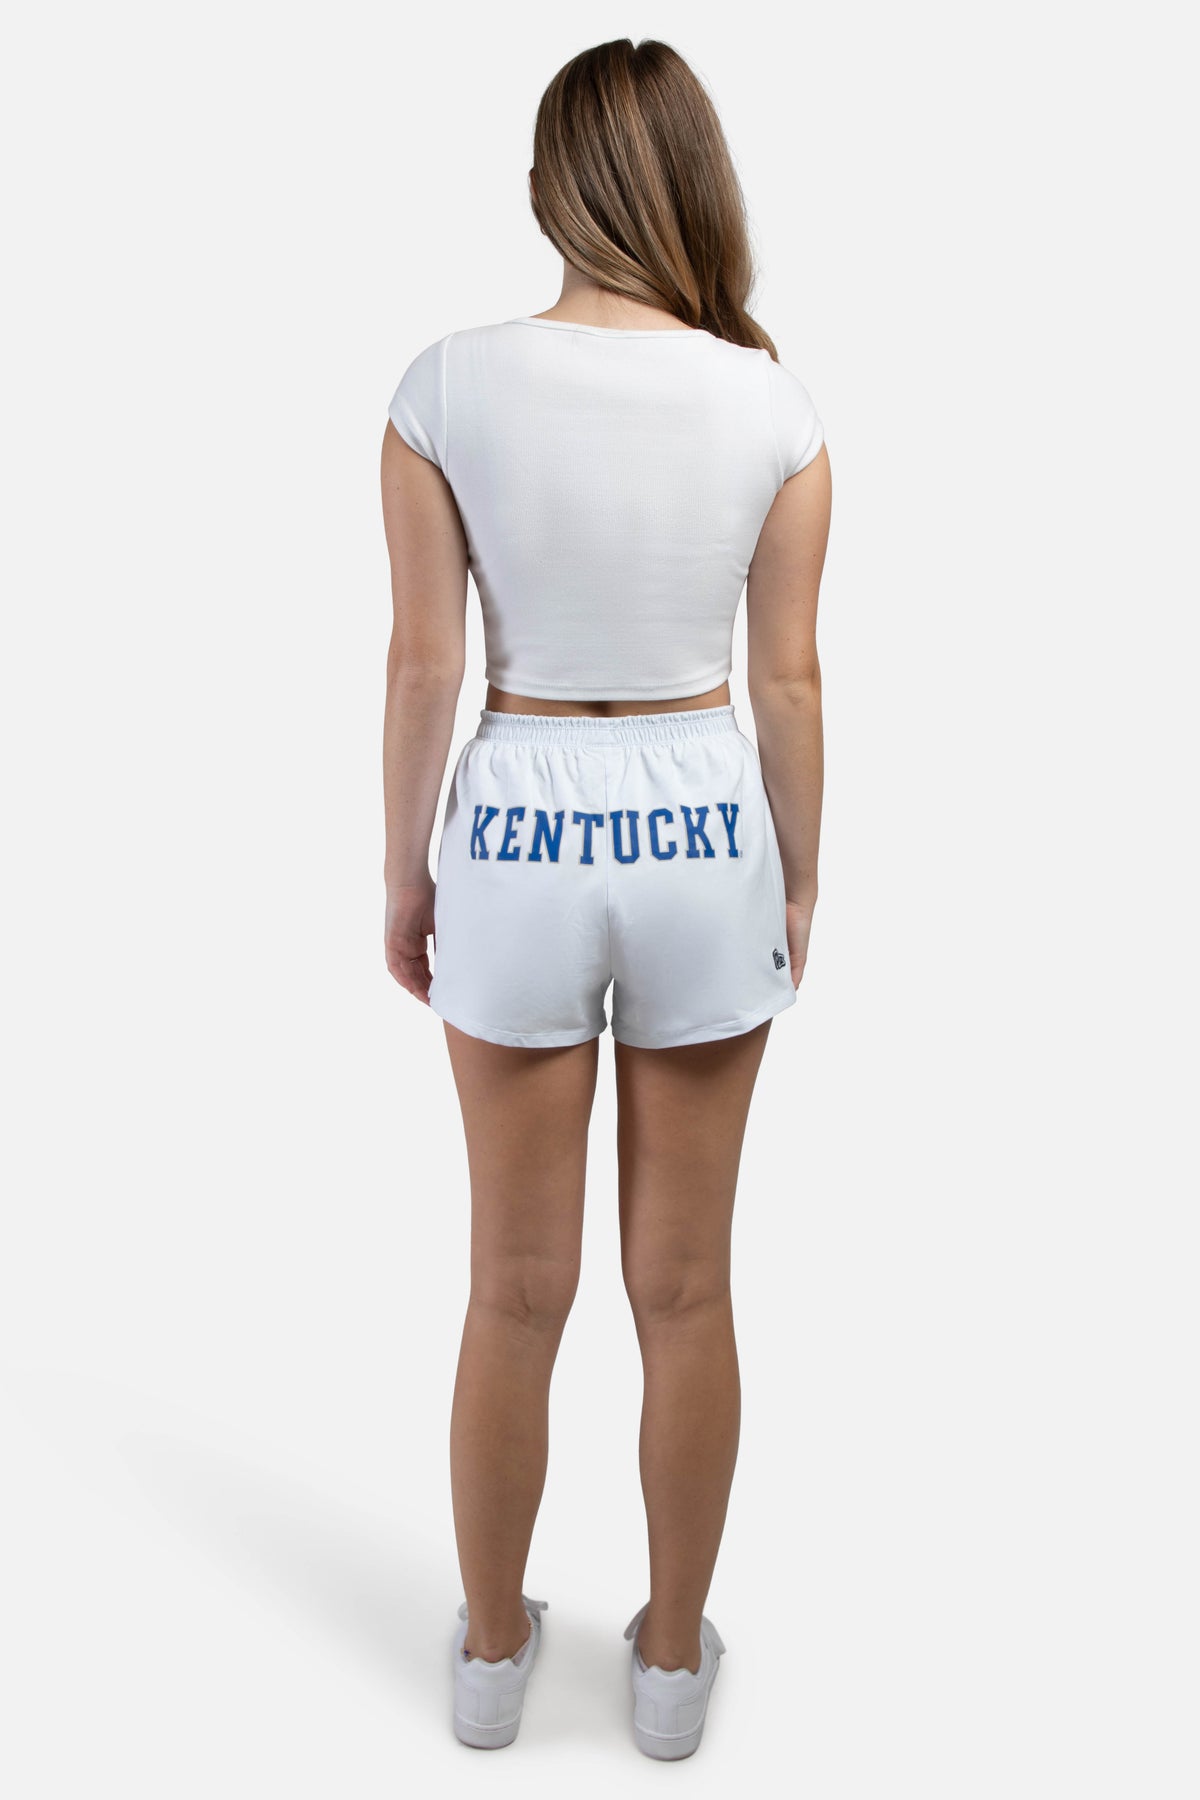 University of Kentucky Soffee Shorts